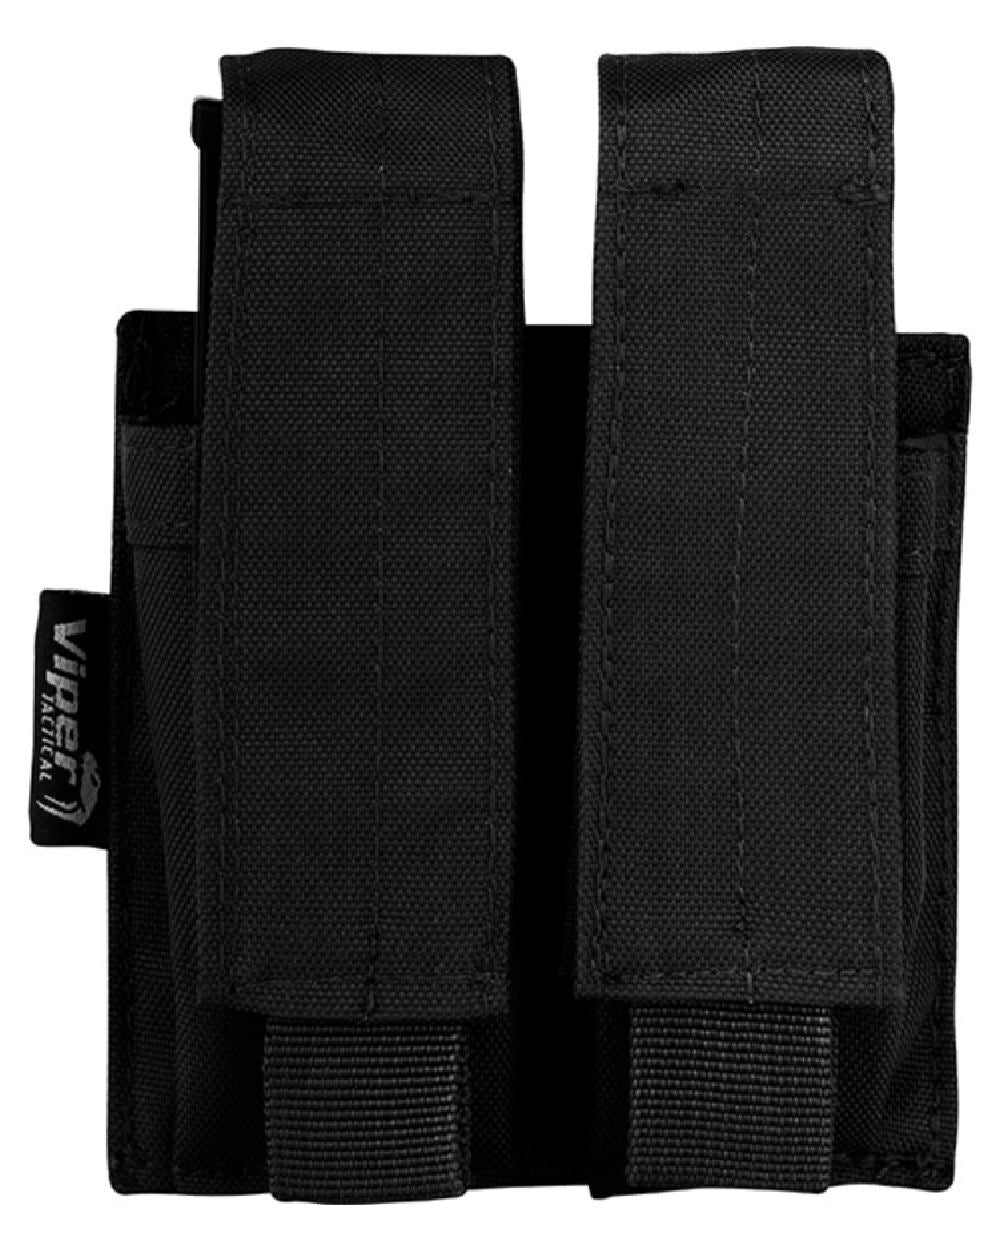 Viper Modular Double Pistol Mag Pouch in Black 